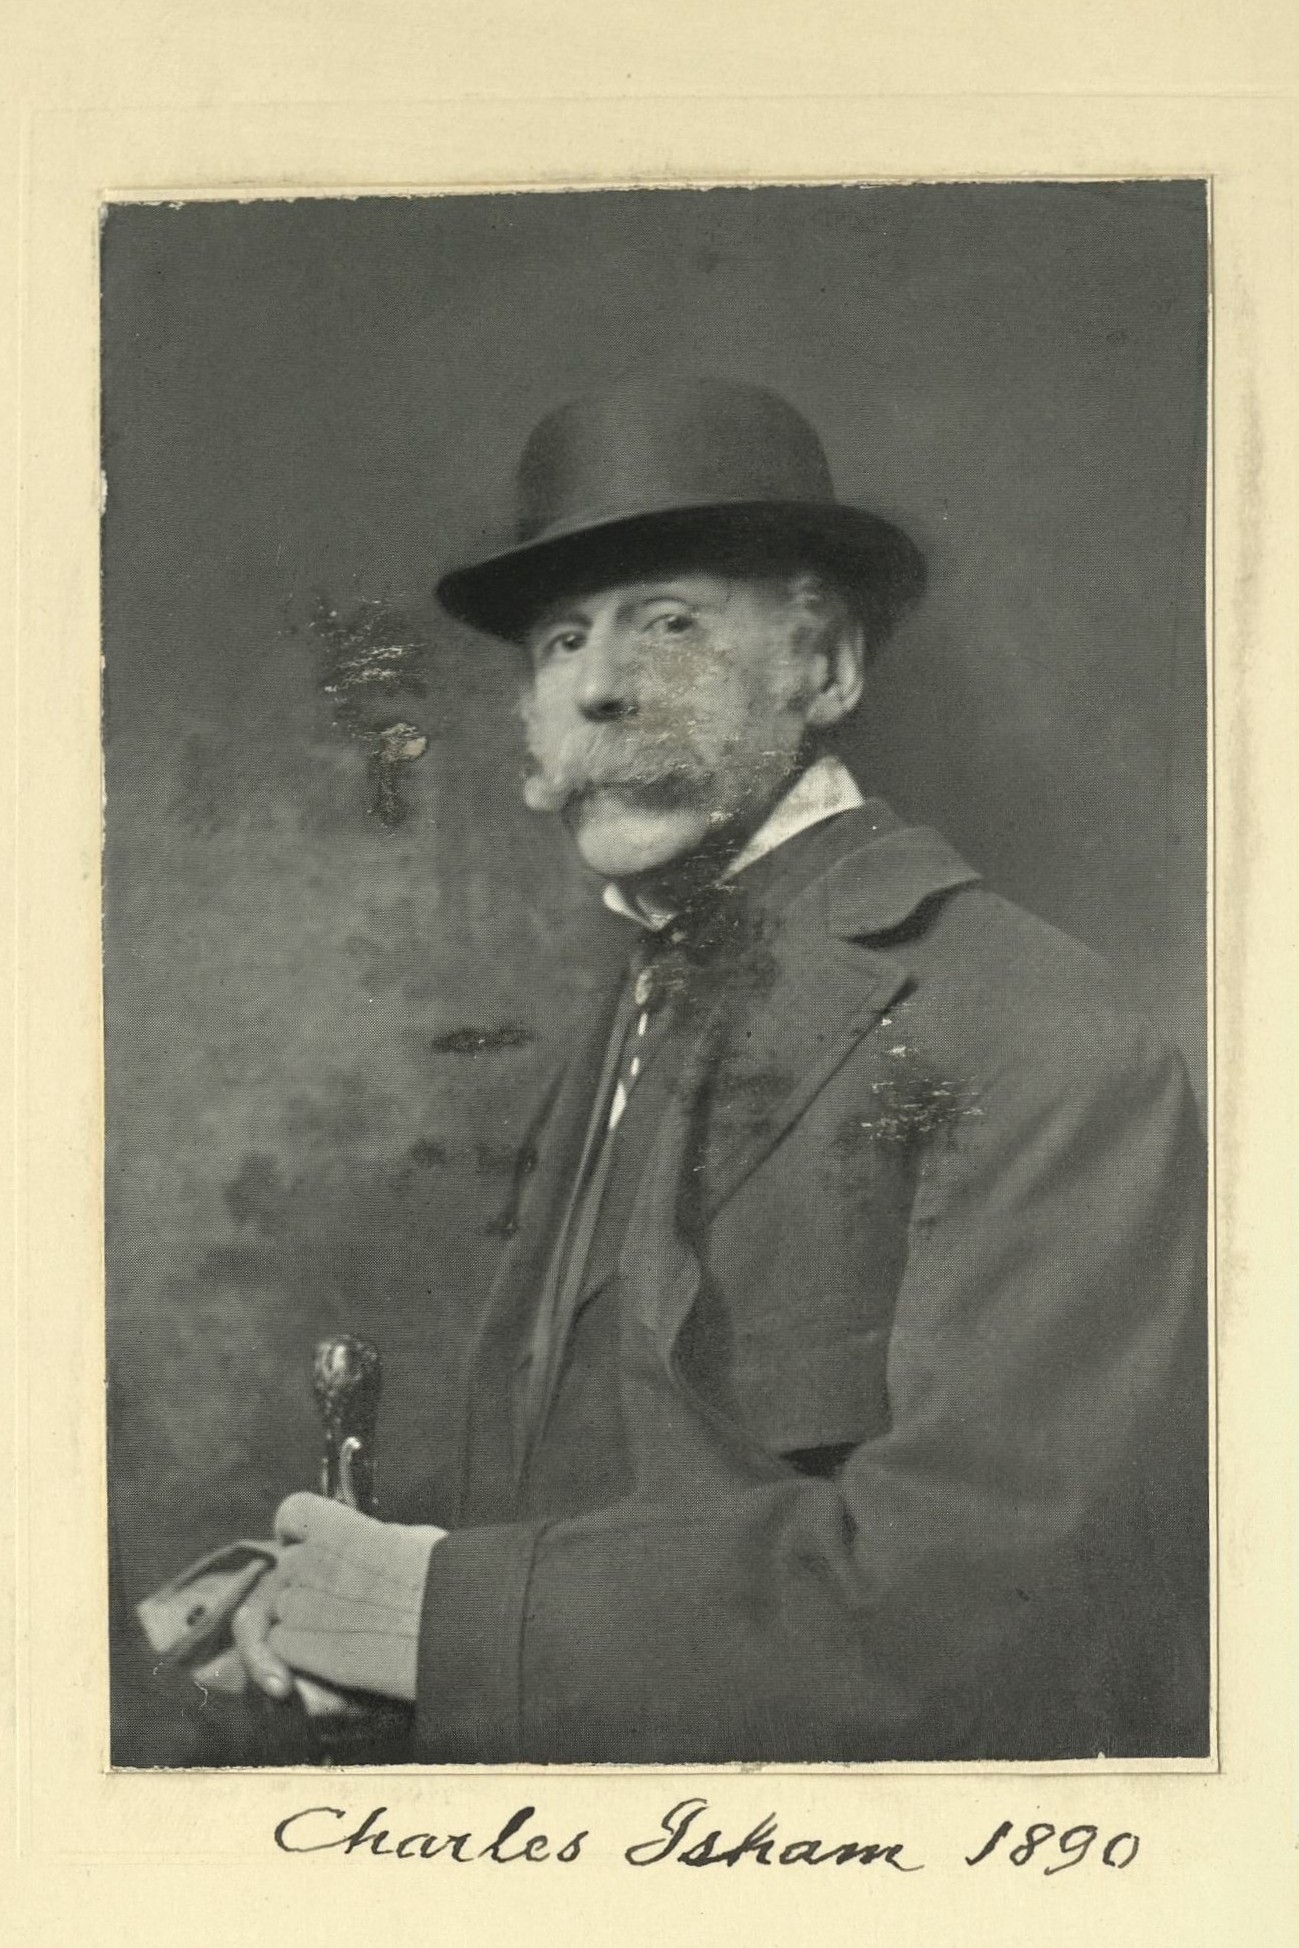 Member portrait of Charles Isham